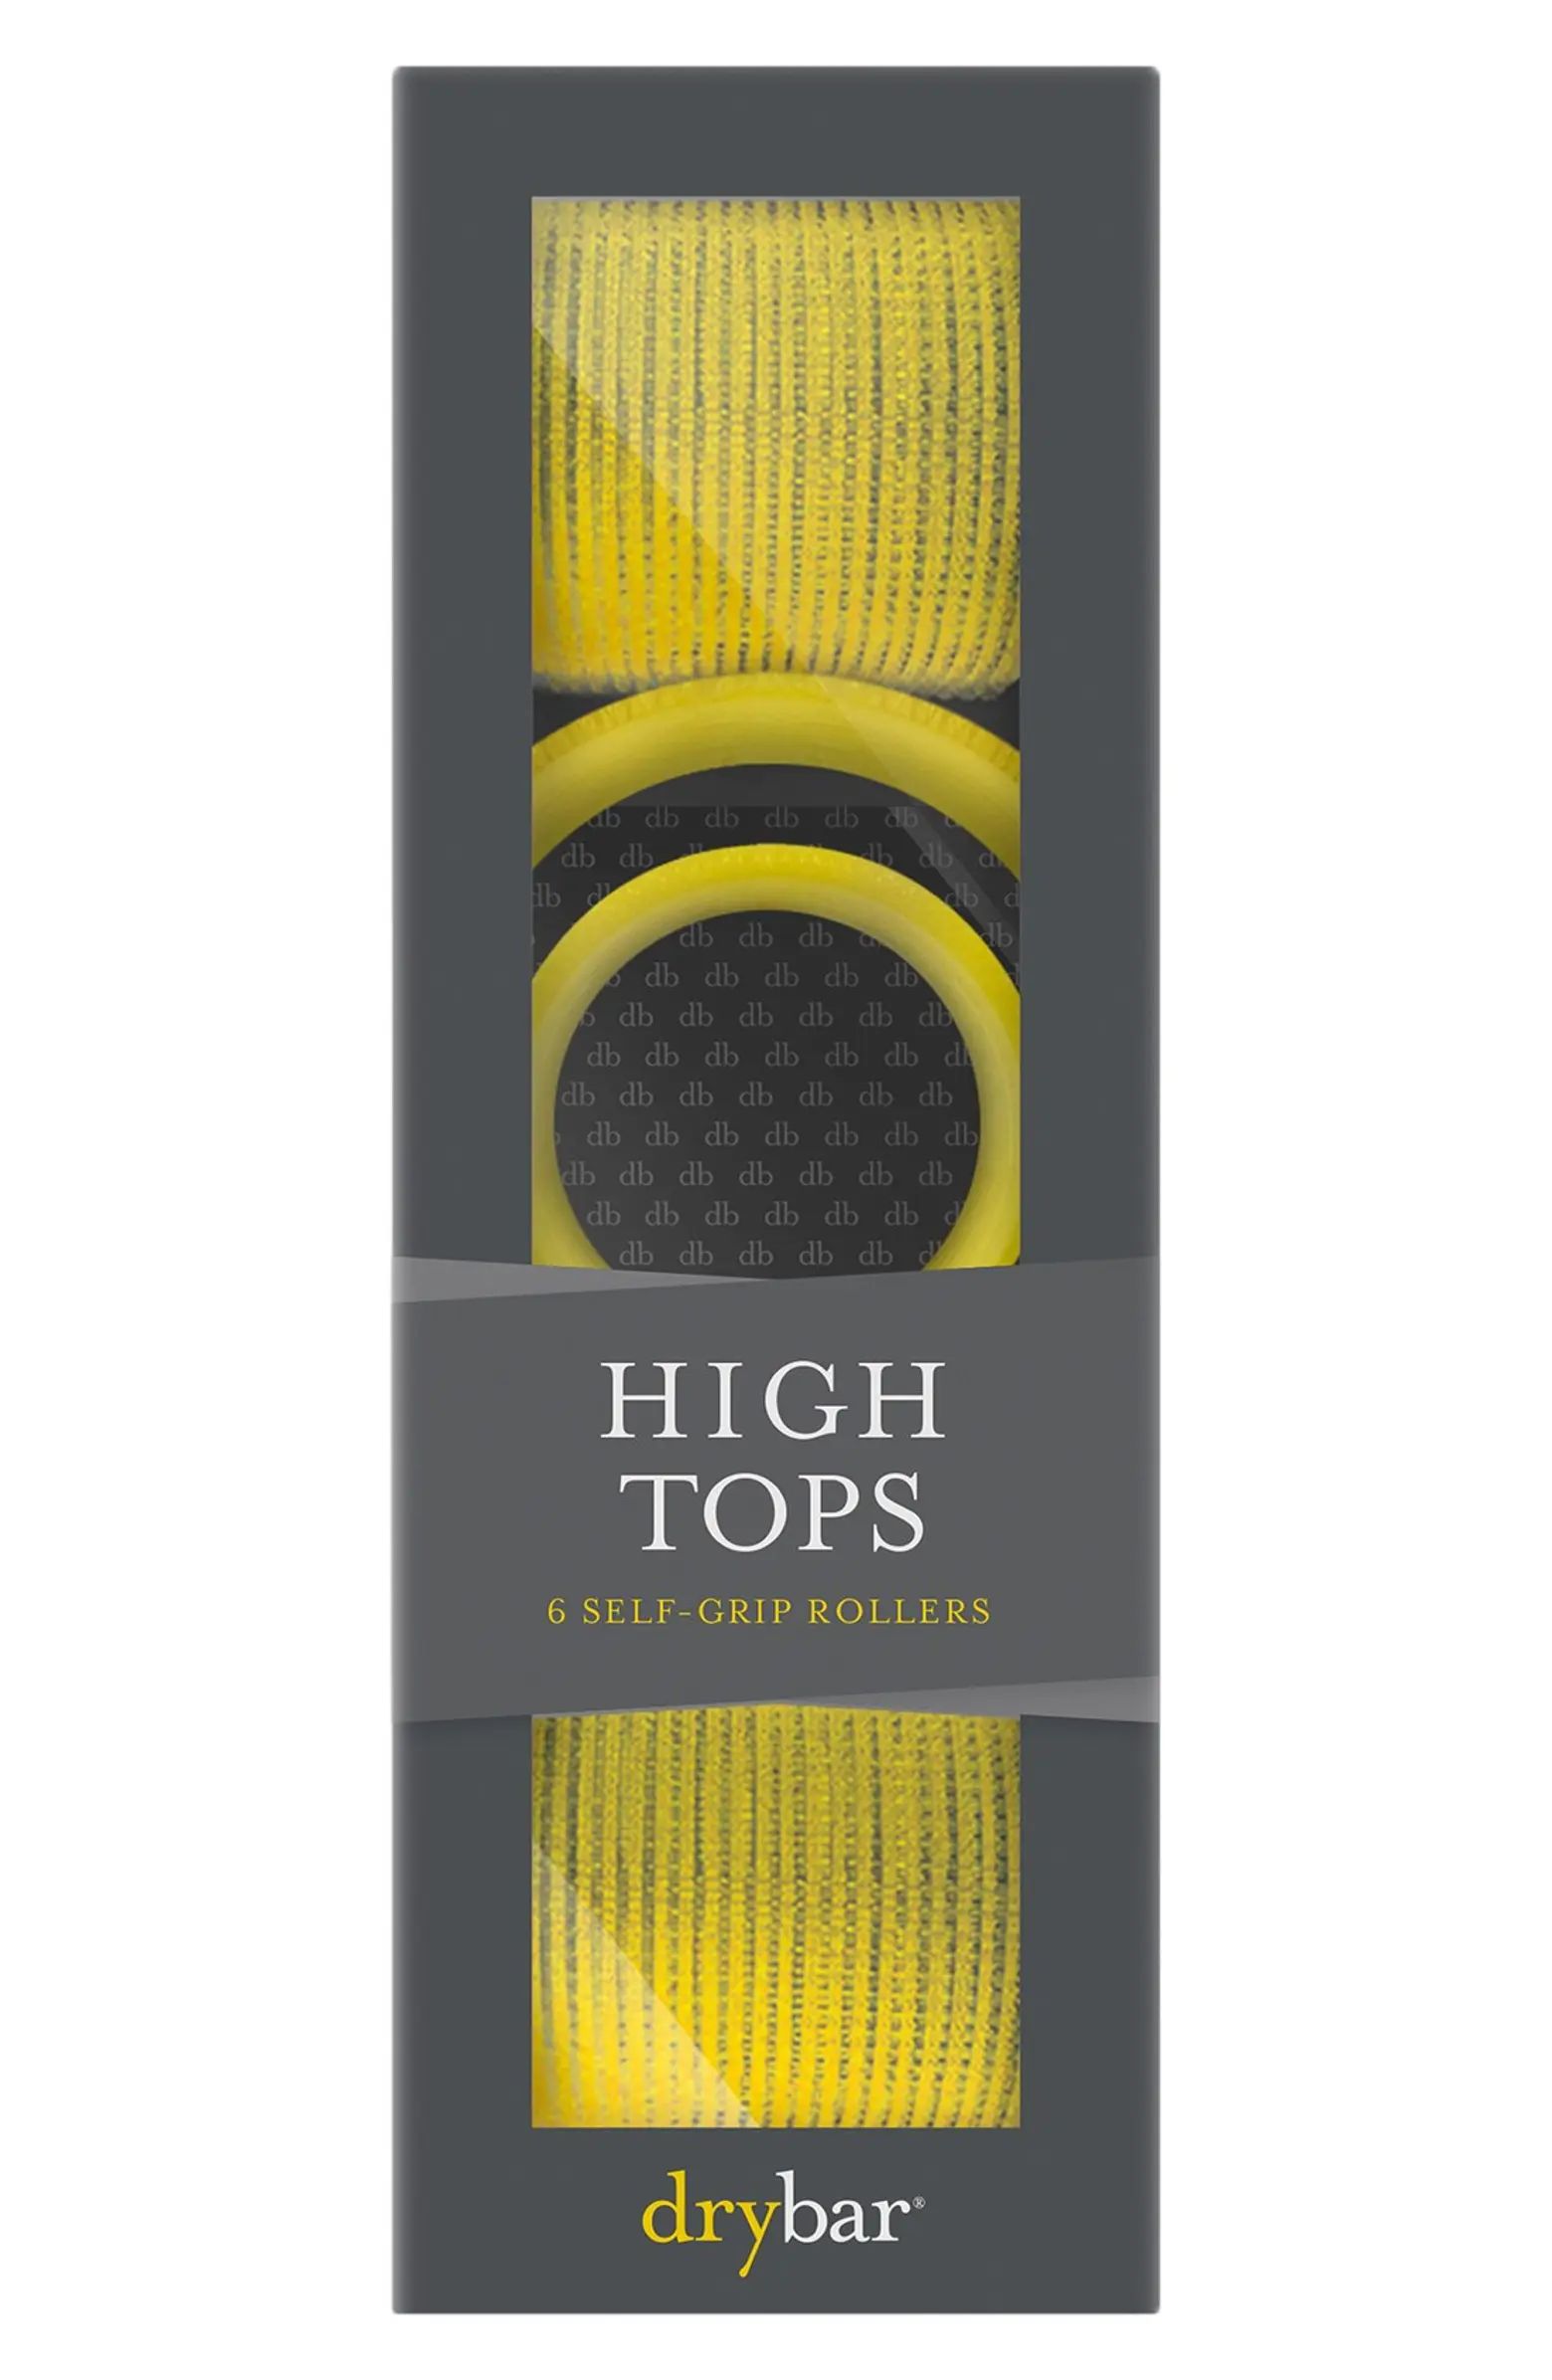 High Tops Self-Grip Rollers | Nordstrom